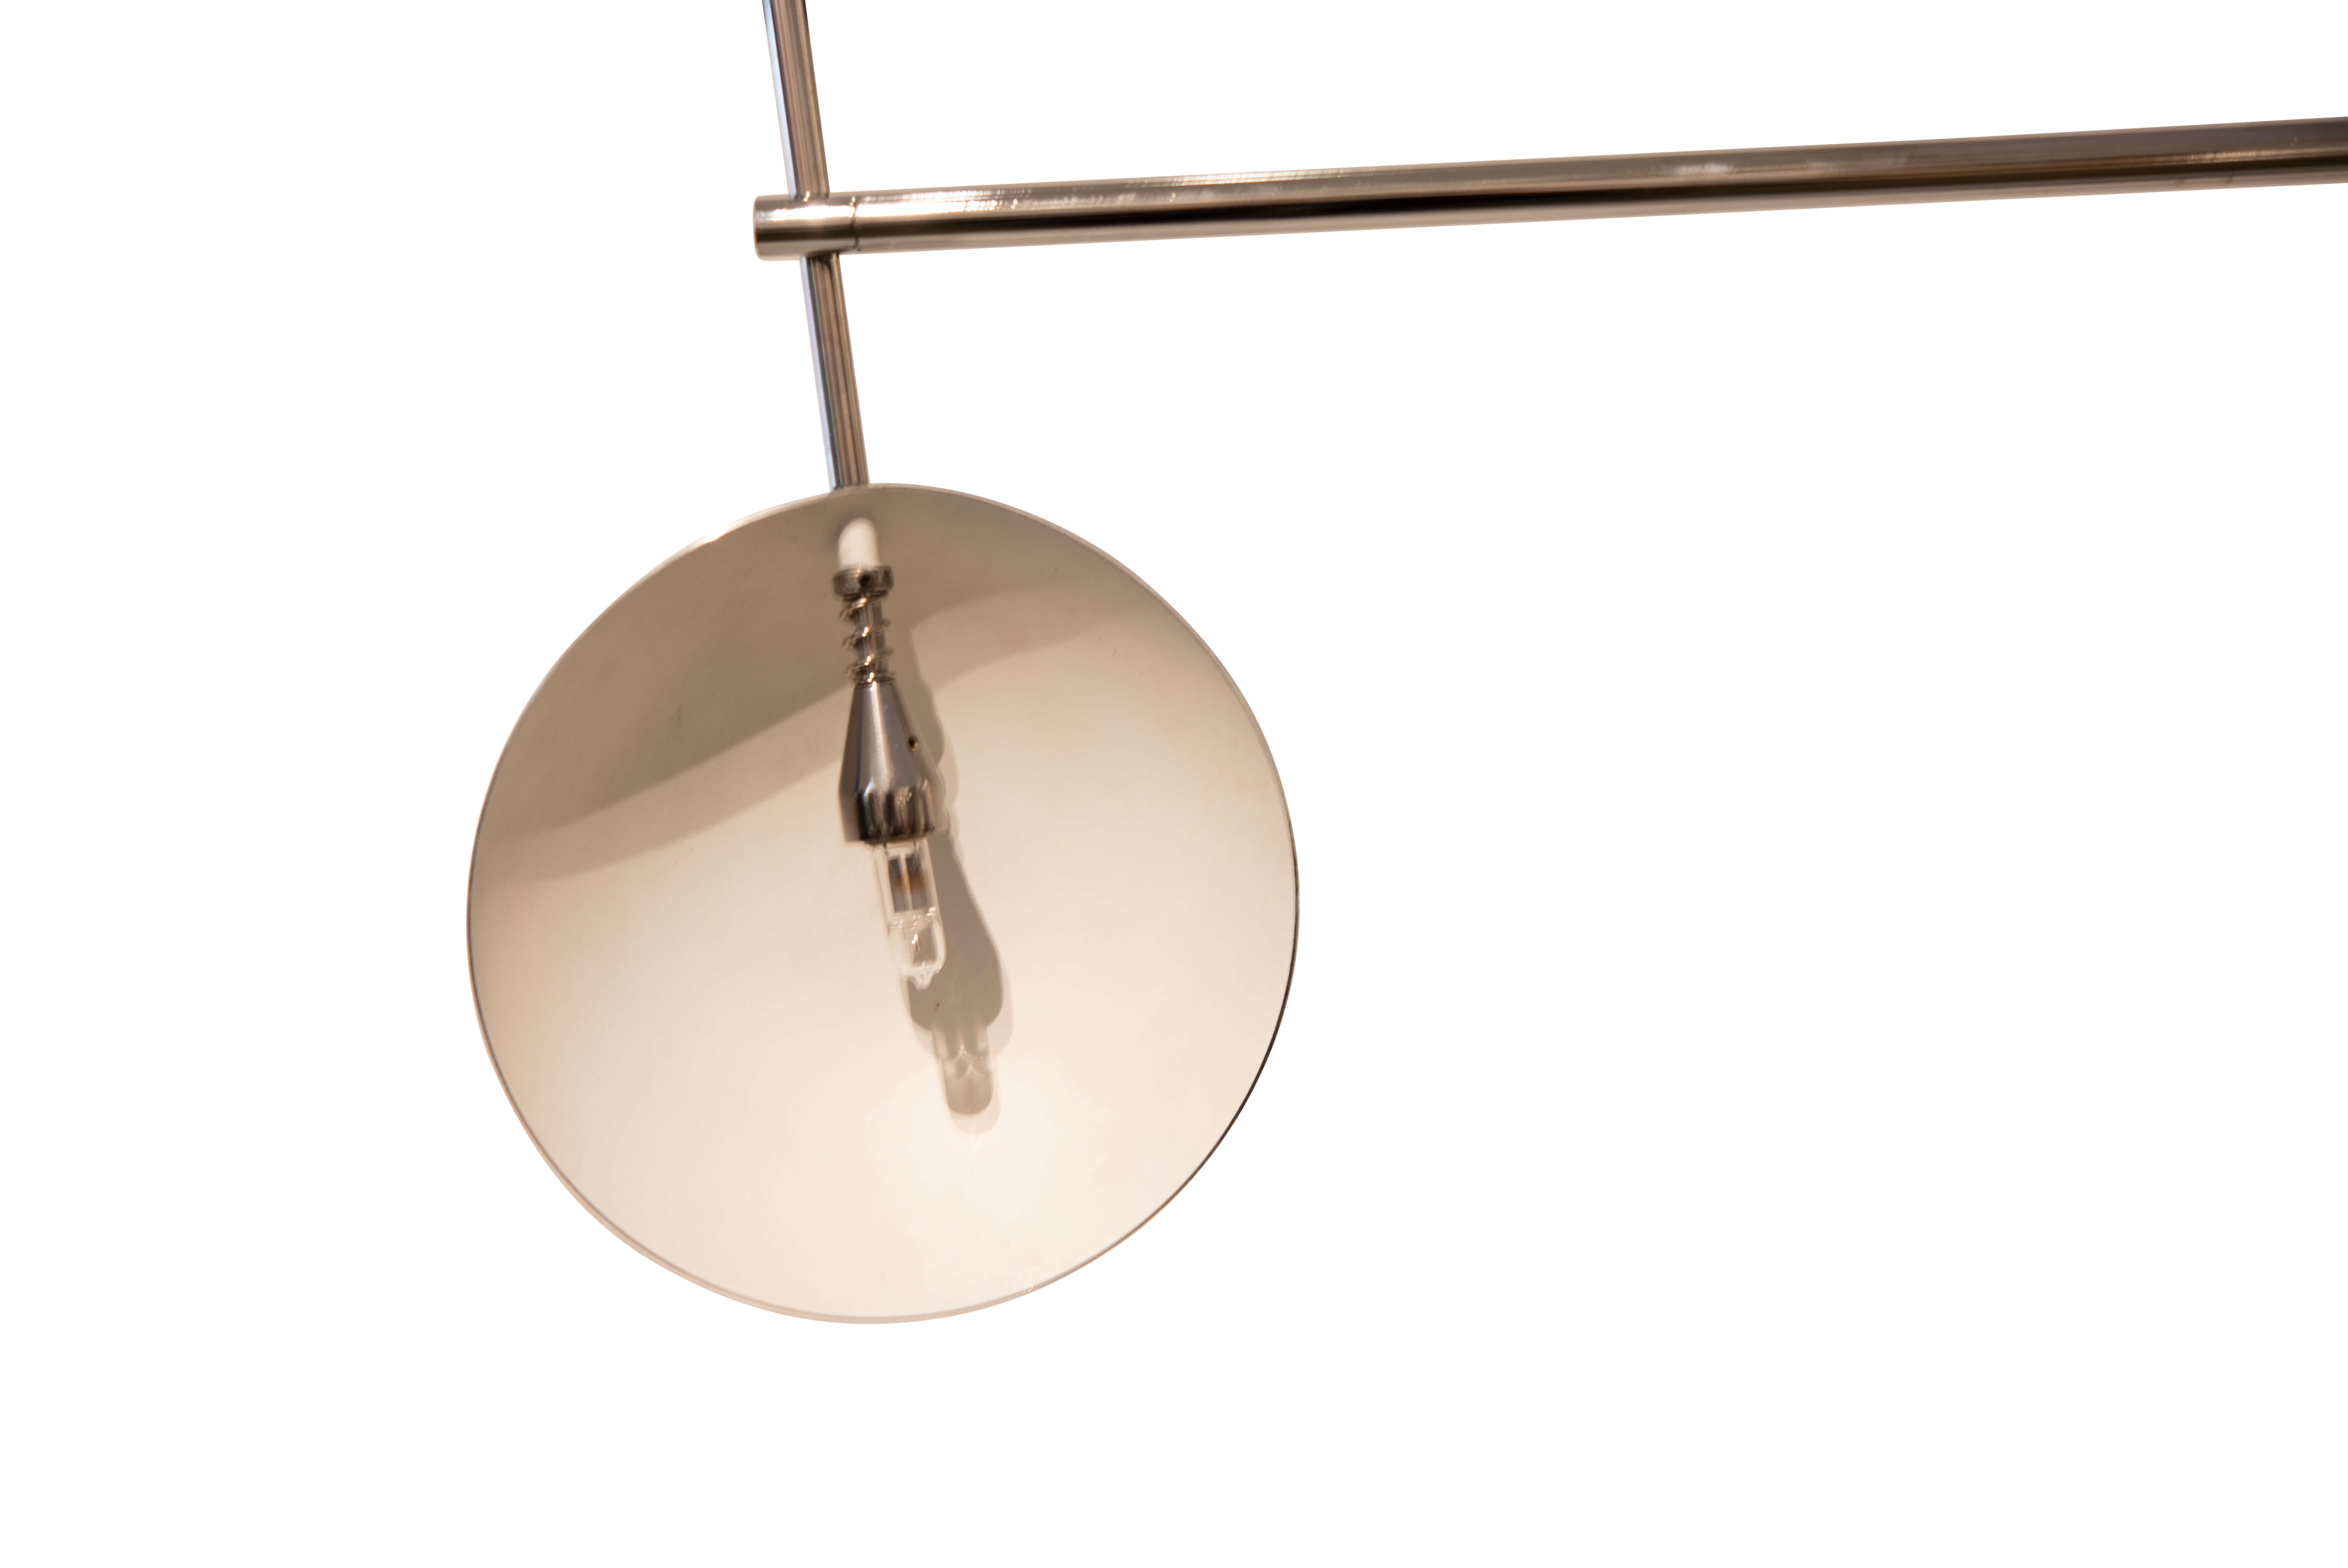 Verstellbare Stehlampe | Adjustable Floor Lamp - Image 2 of 5